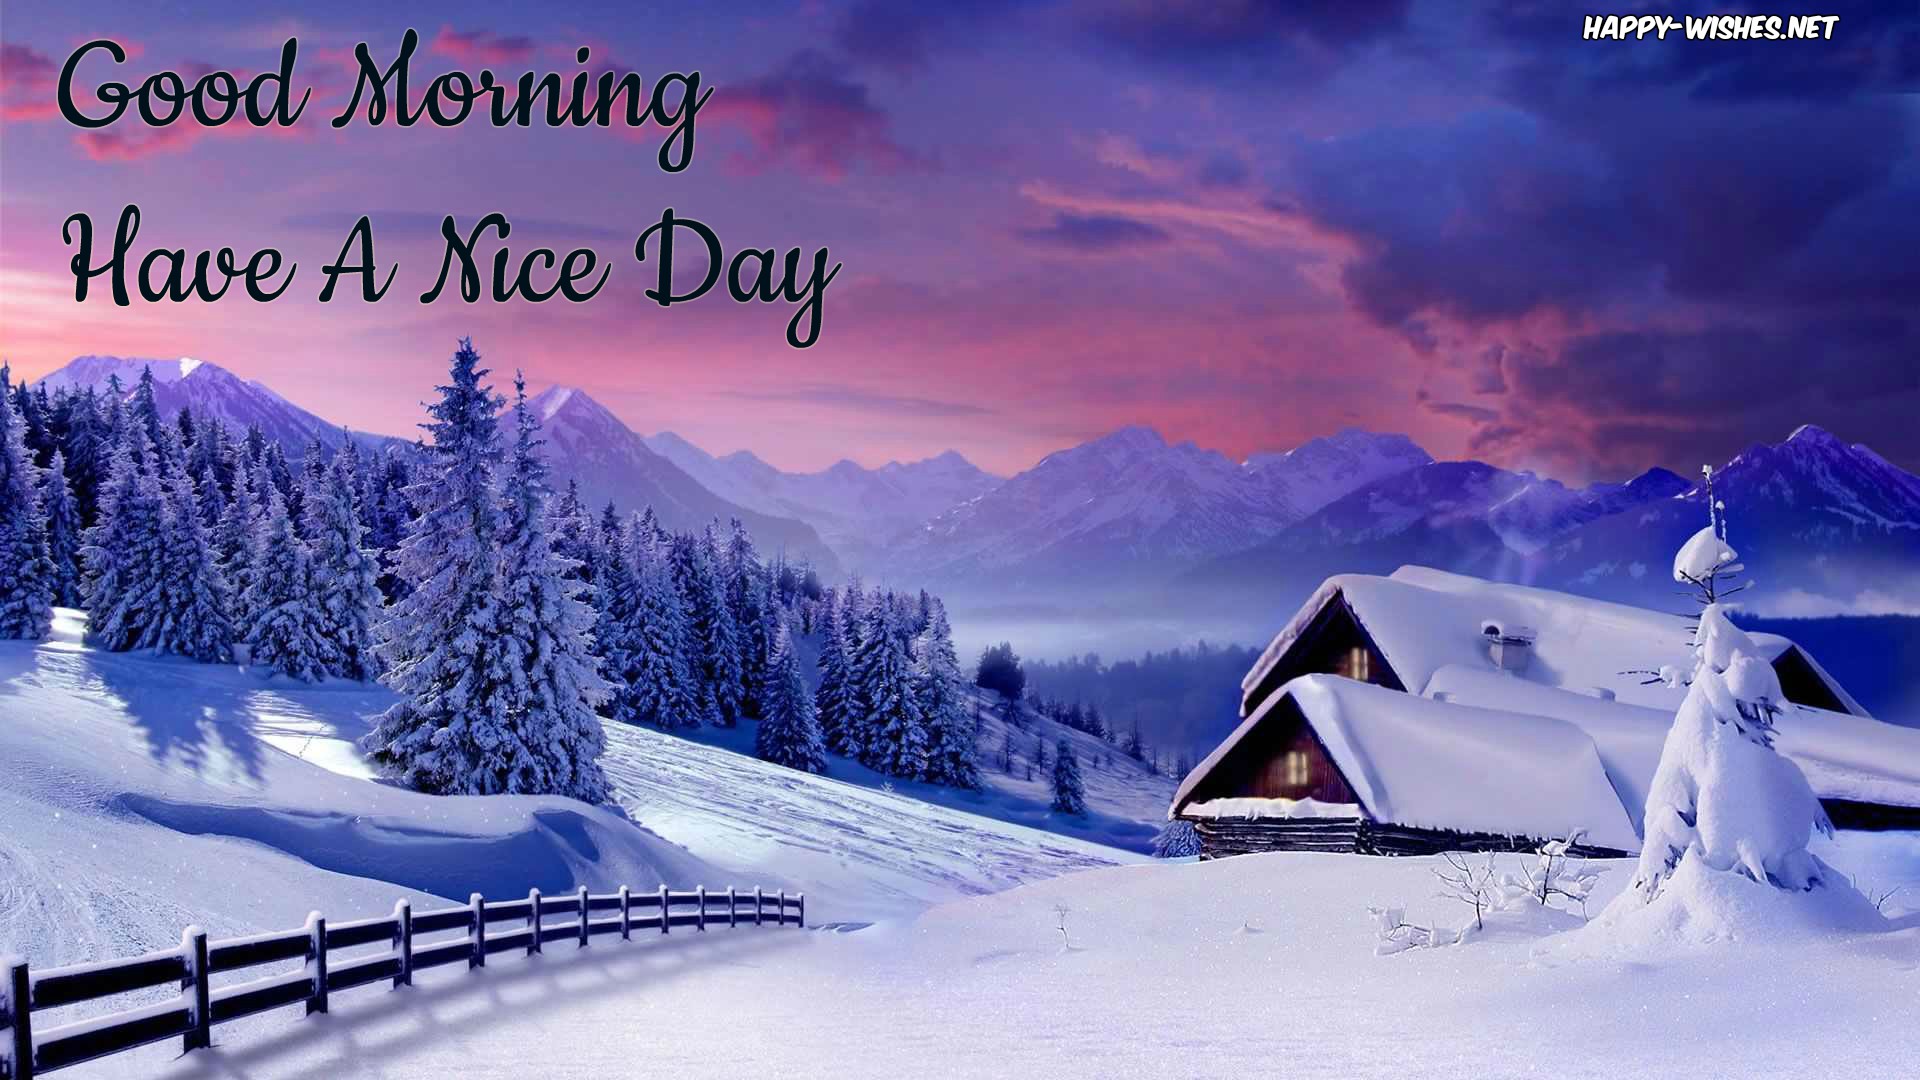 Good Morning-nature Images - Winter Wallpaper 1080p - 1920x1080 Wallpaper -  